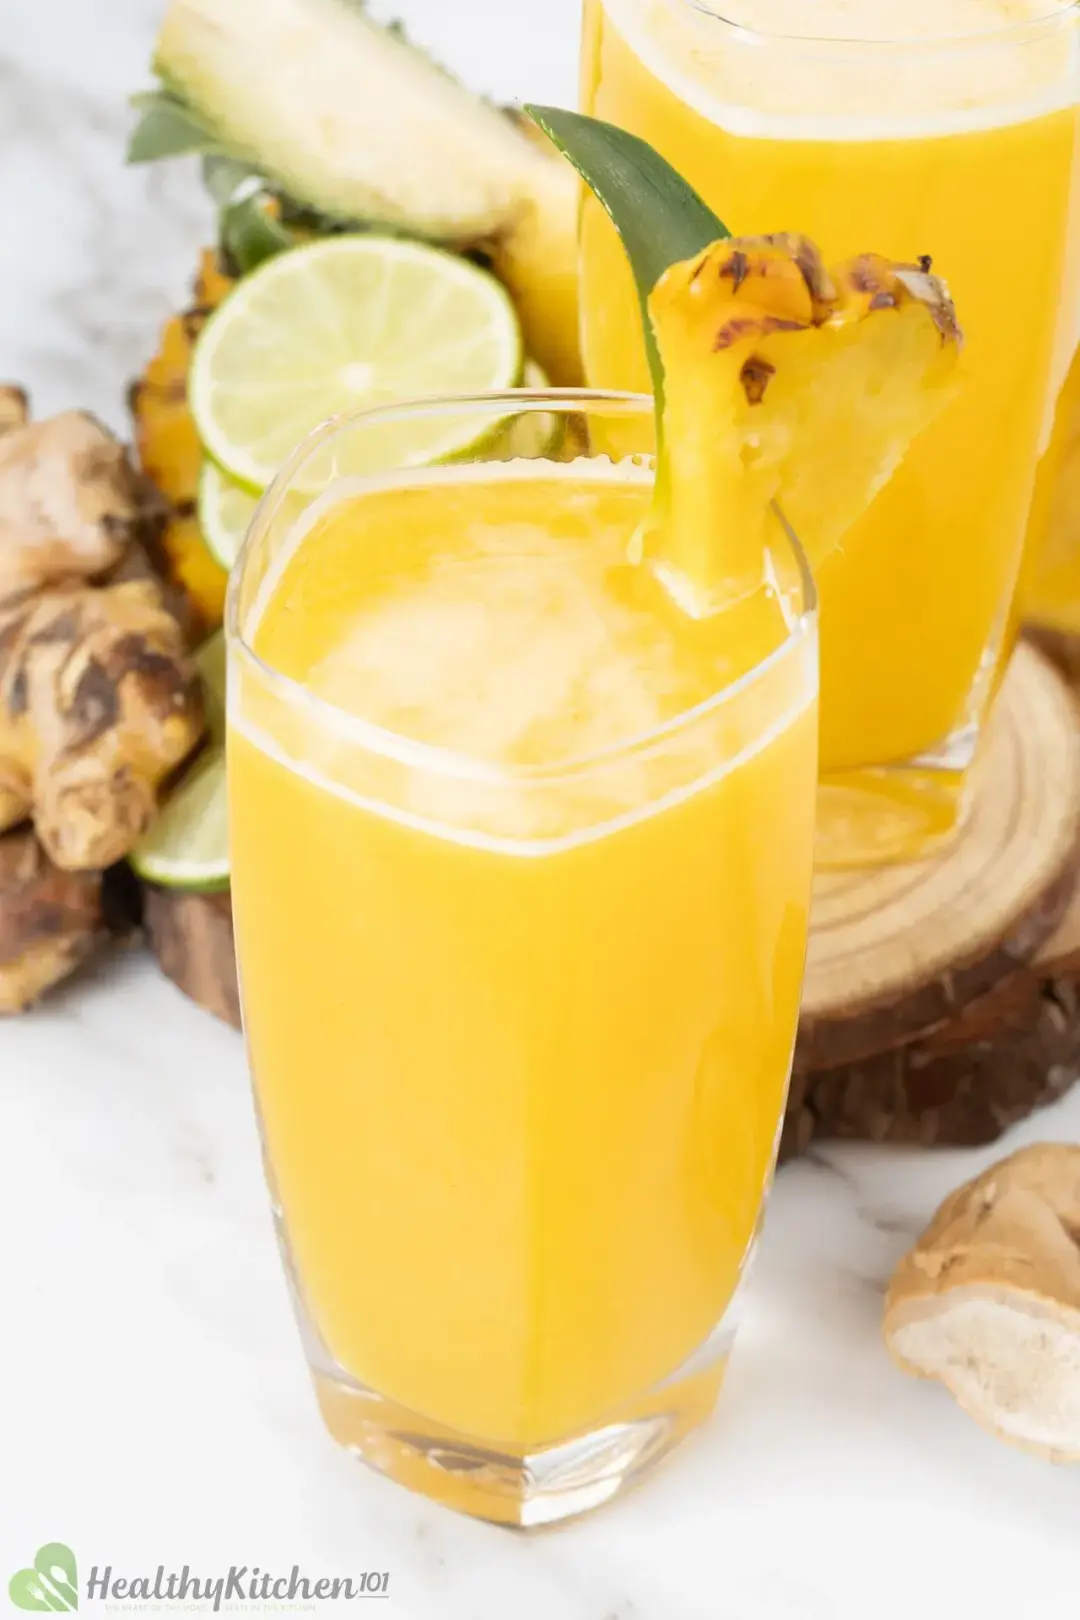 Pineapple Ginger Juice Benefits